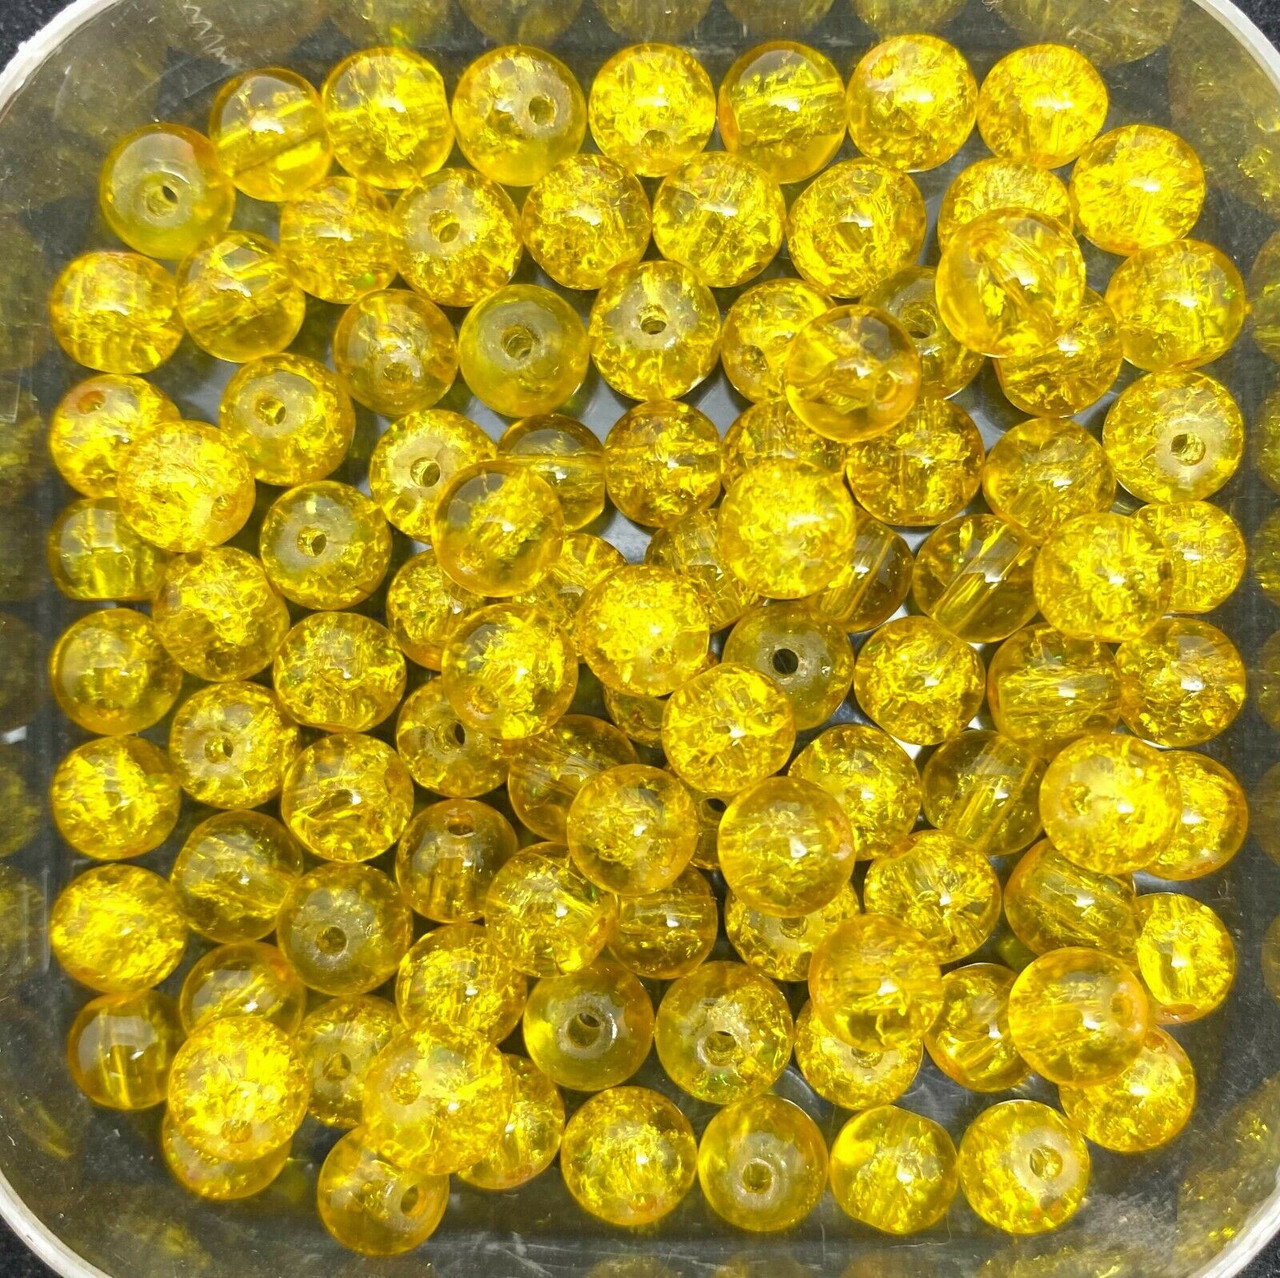 4mm Crackle Glass Beads - Sunshine Yellow, 200 beads